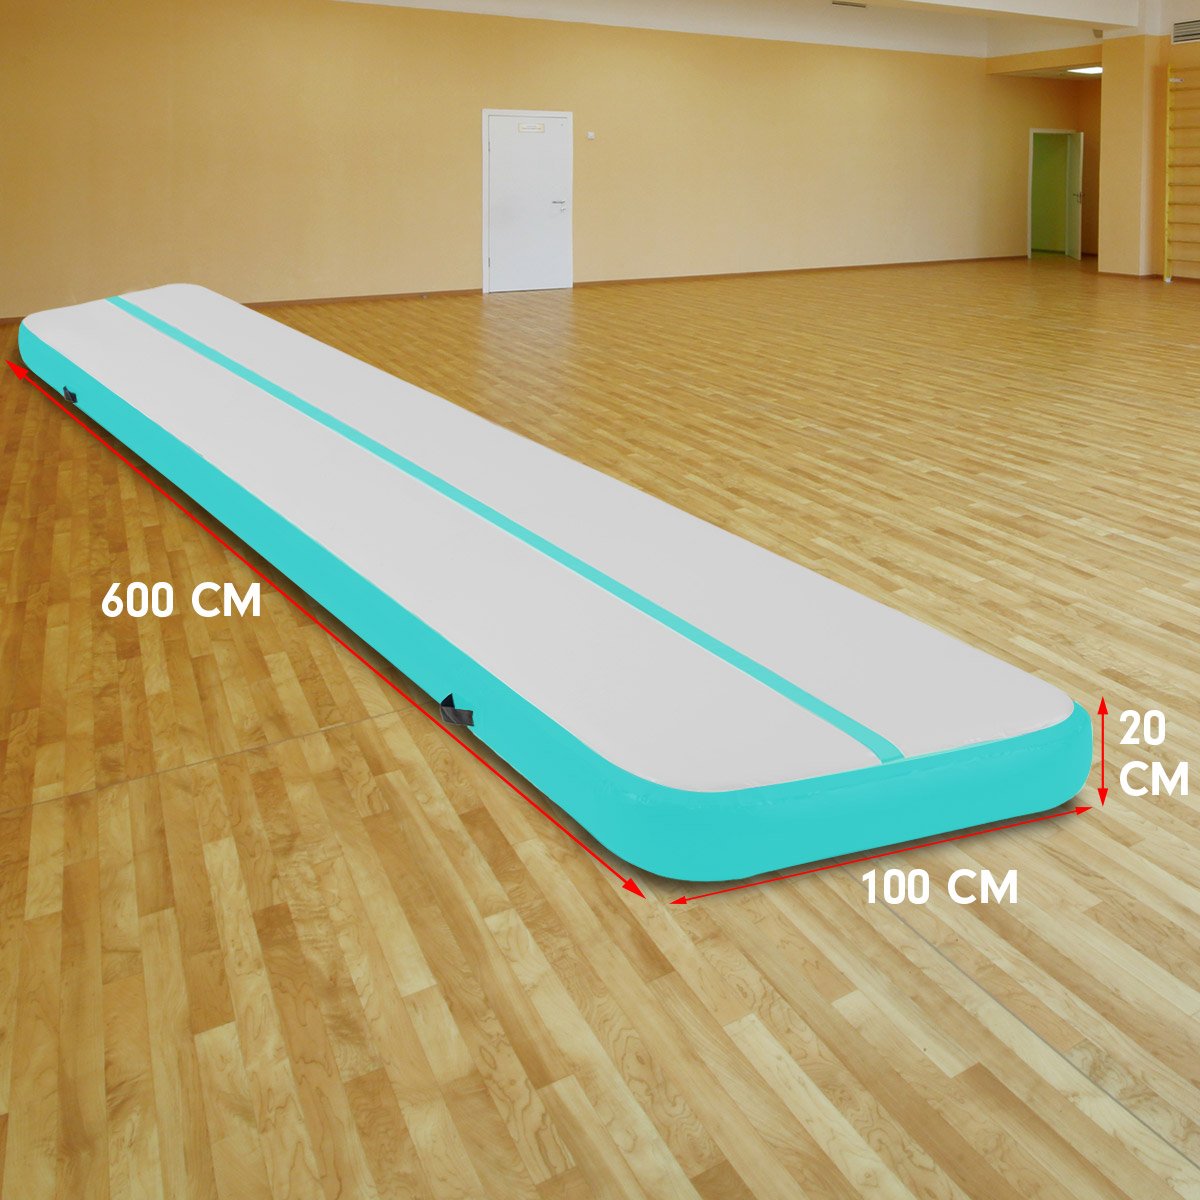 6m x 1m Air Track Inflatable Gymnastics Tumbling Mat - Green